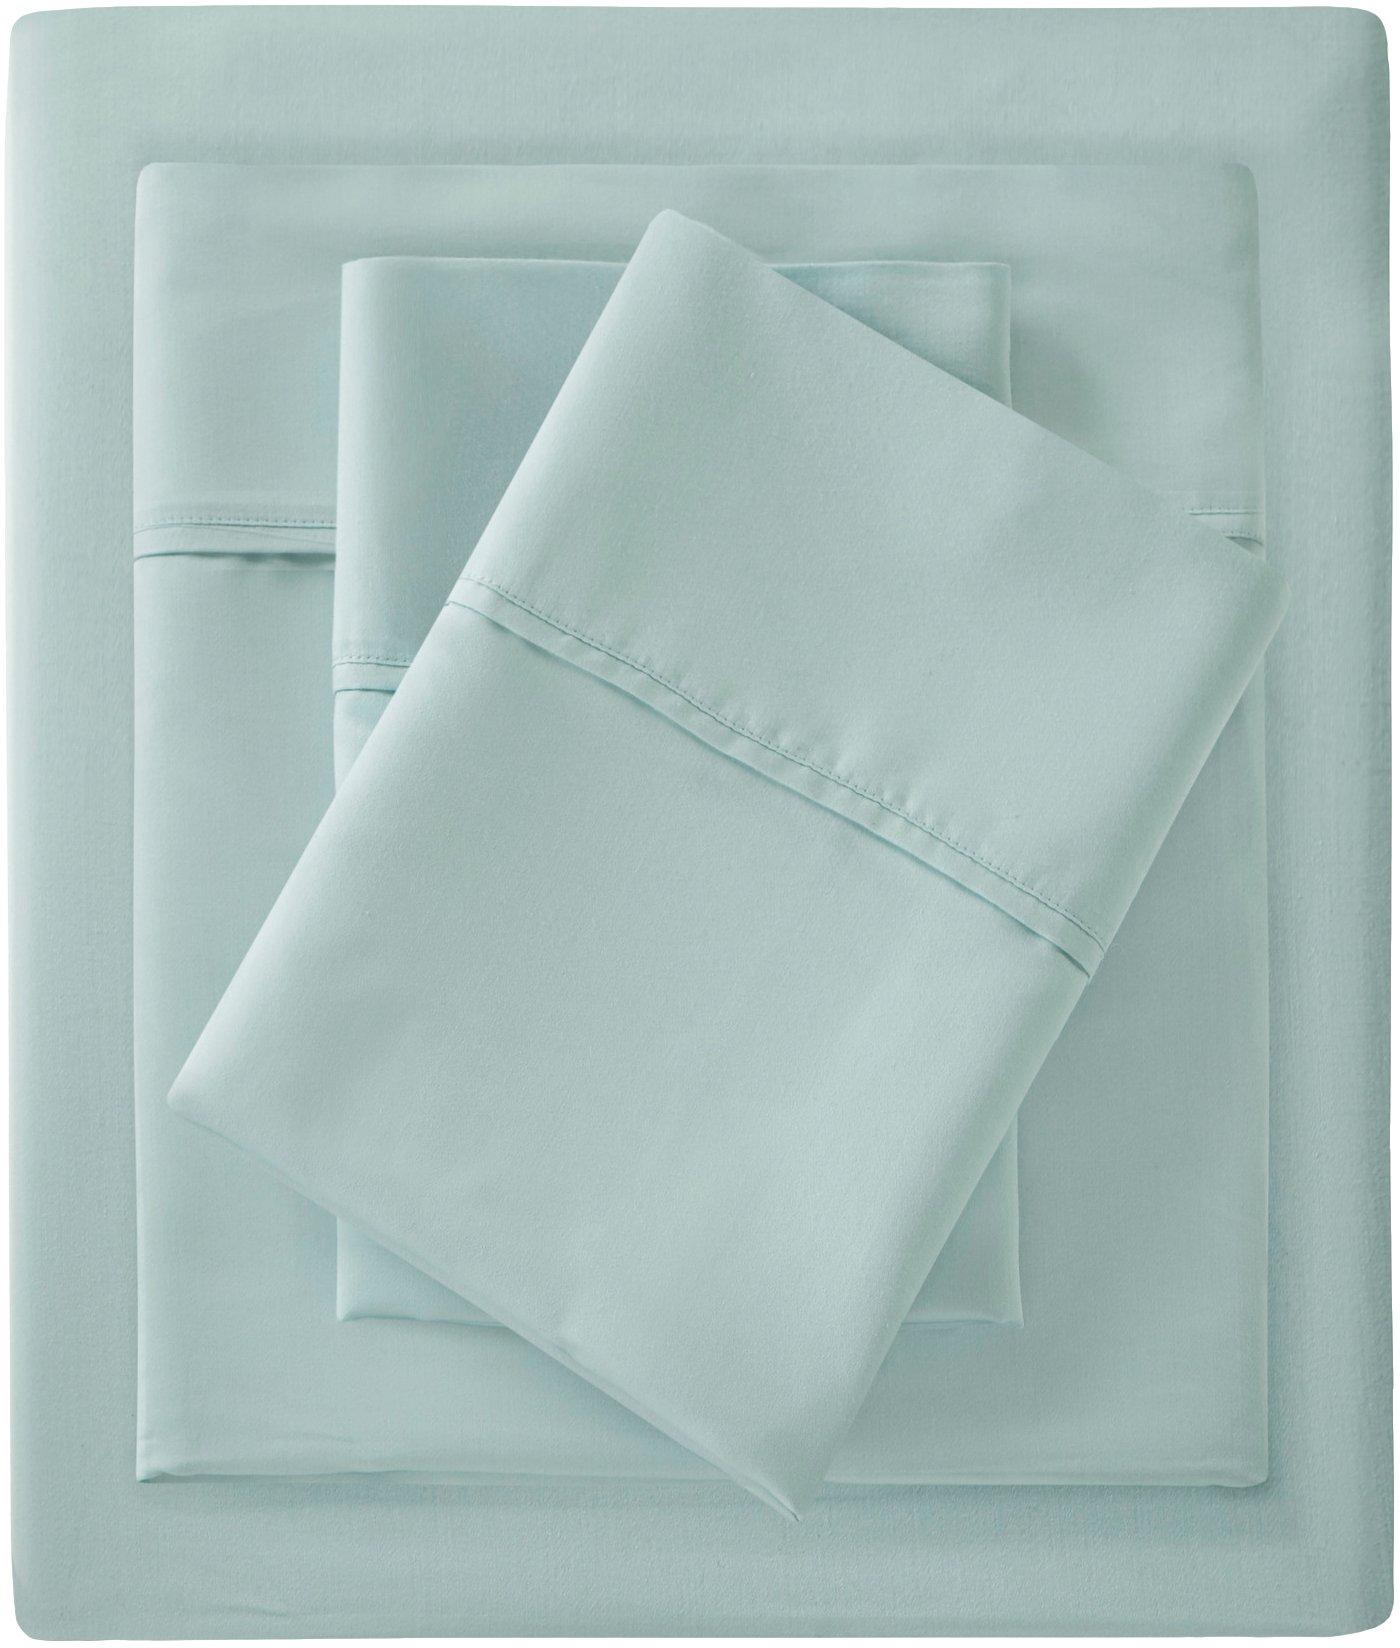 Photos - Pillowcase Madison Park 1500 Thread Count Cotton Rich Sheet Set